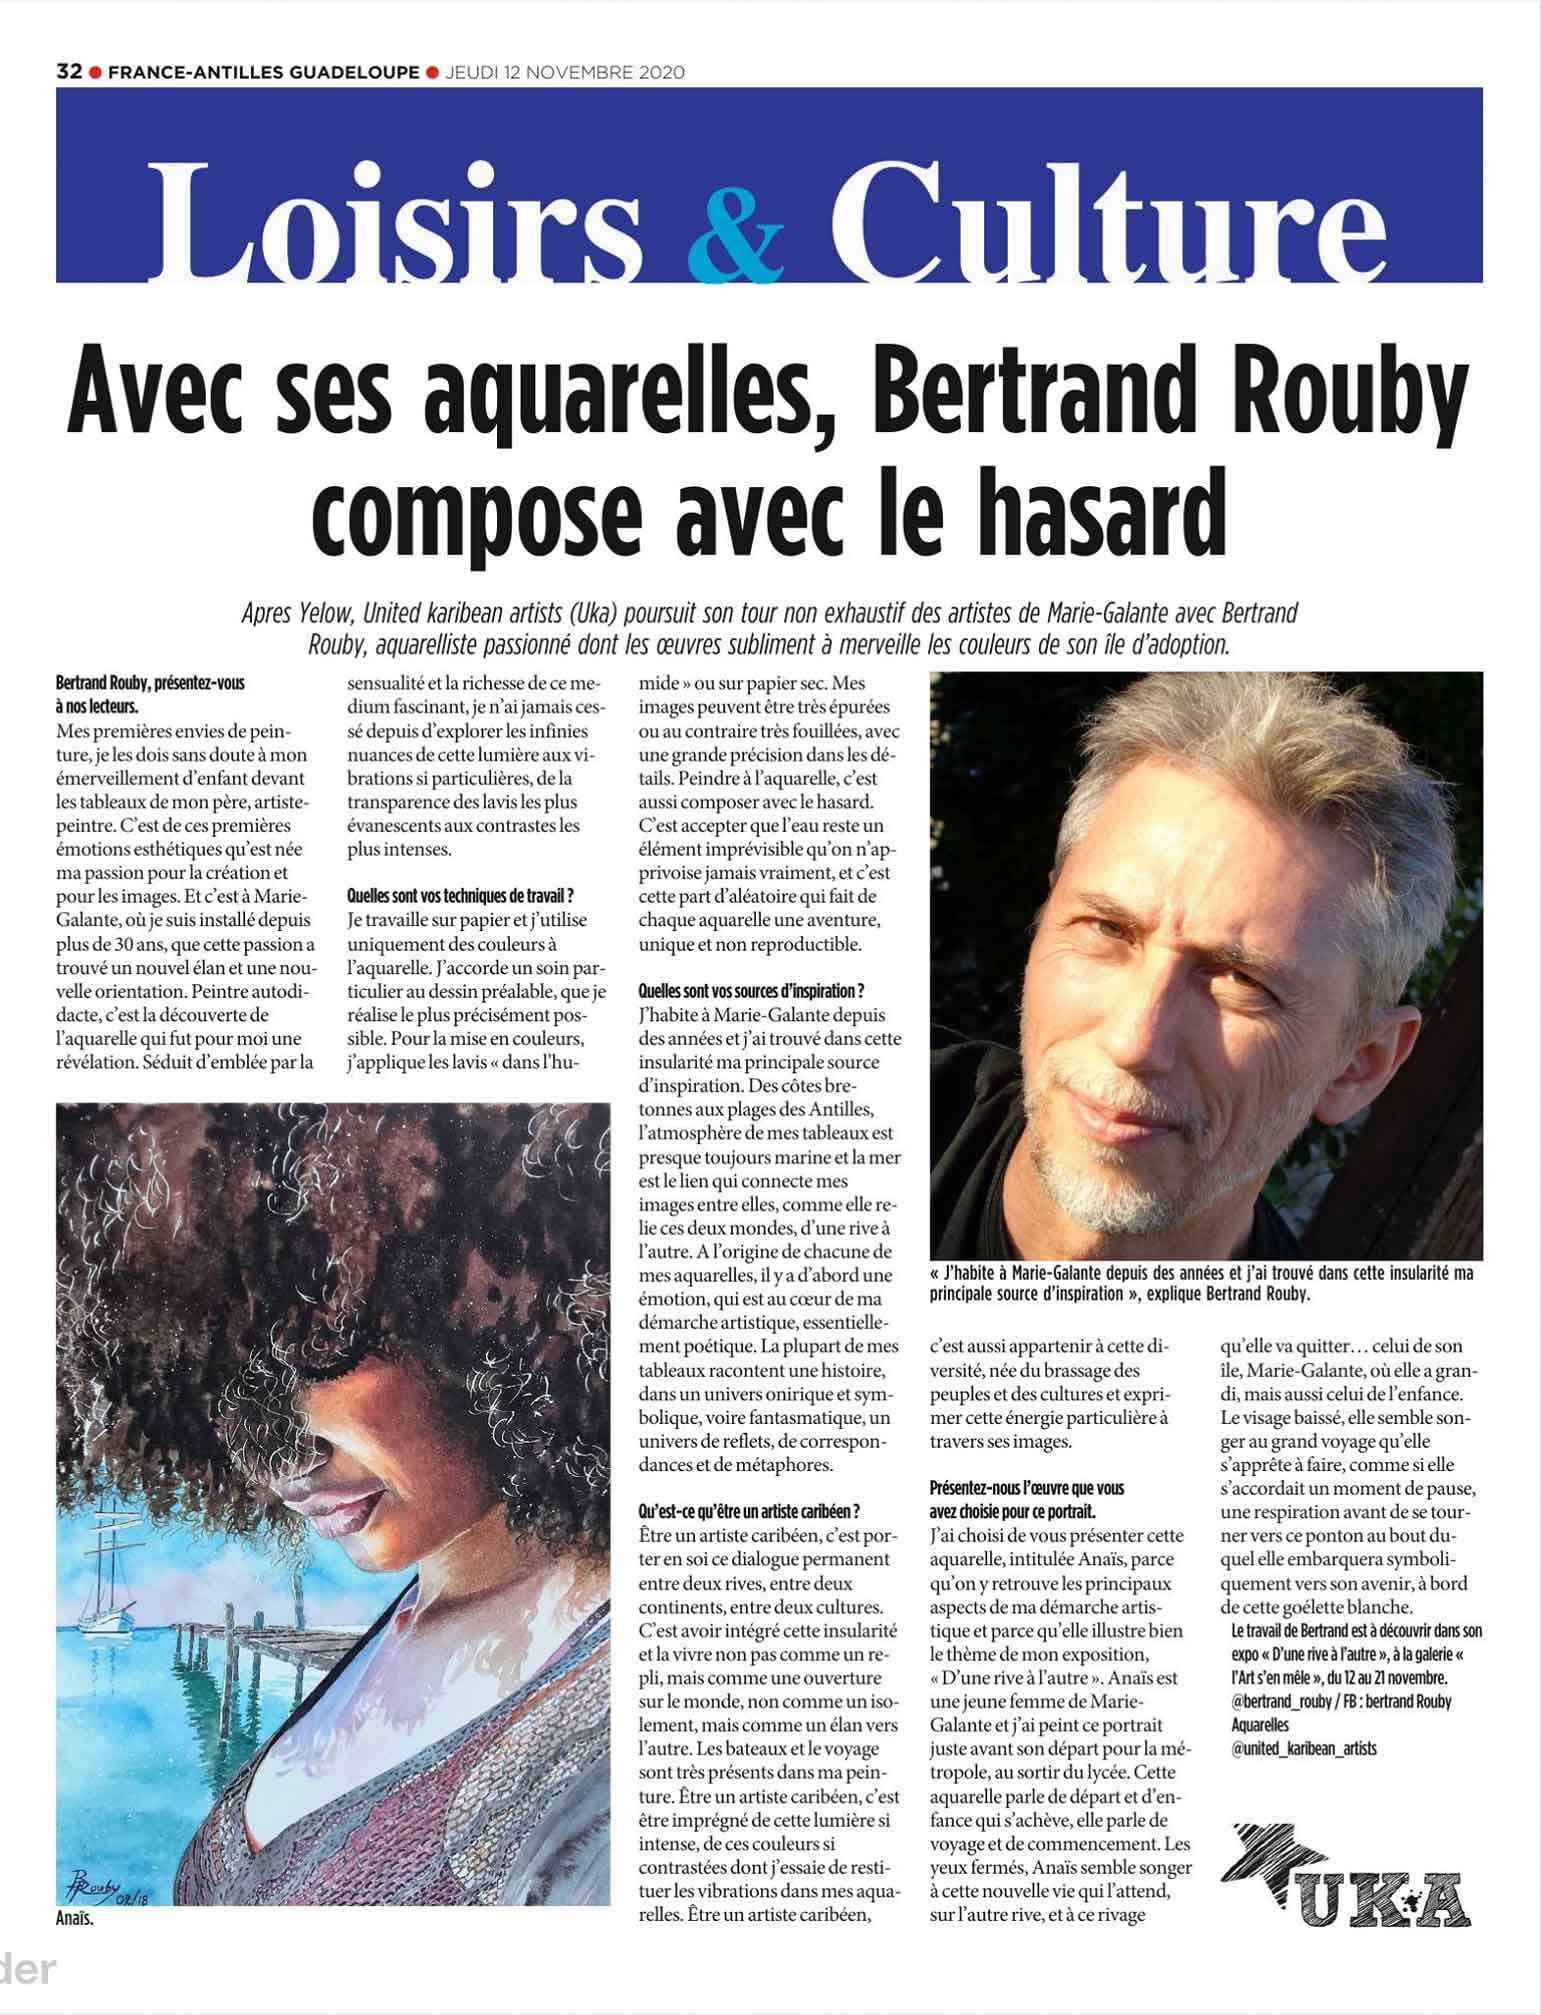 Bertrand Rouby